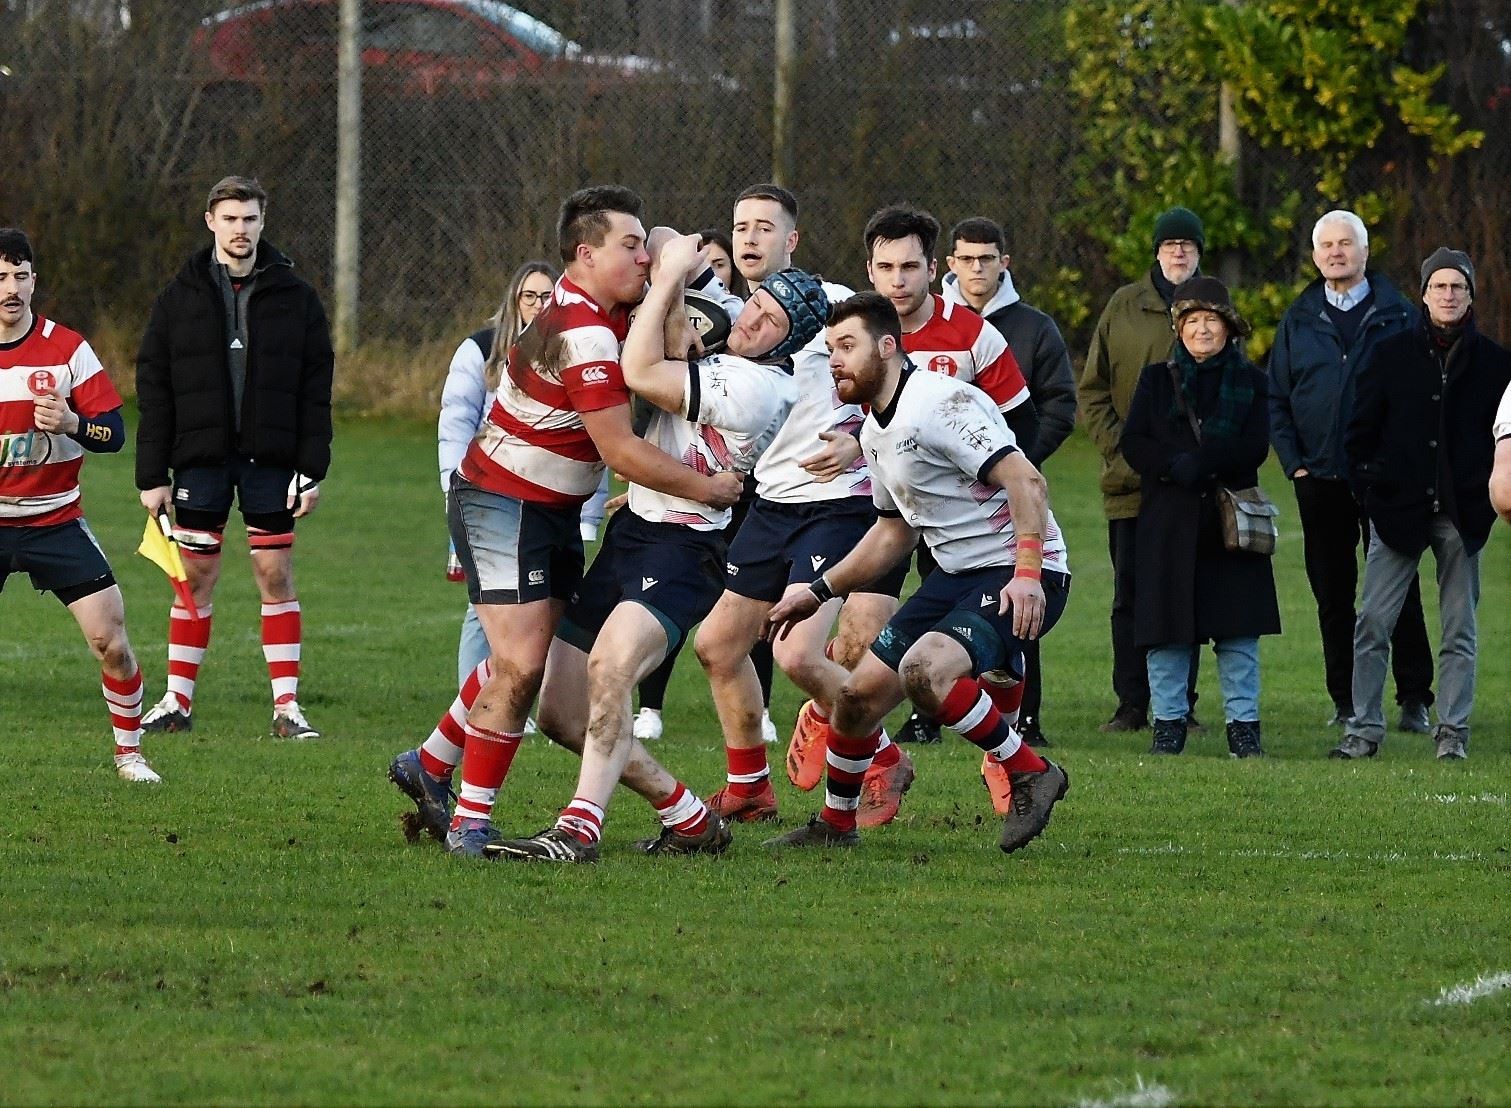 Cameron Hughes makes a tackle for Moray. Photo: James Officer